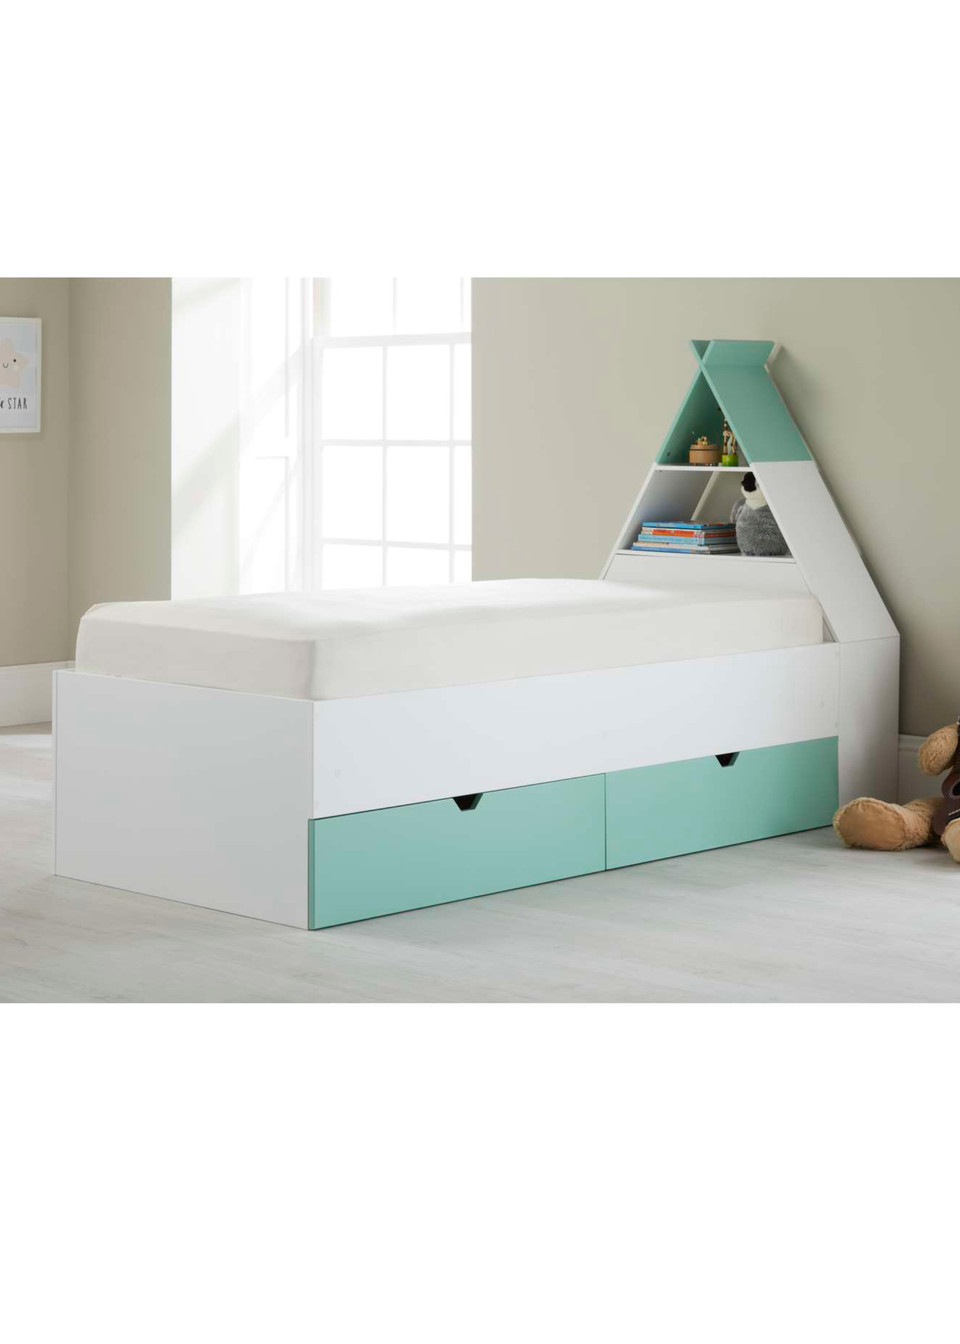 Lloyd Pascal Teepee Cabin Bed (97cm x 223cm x 135cm)